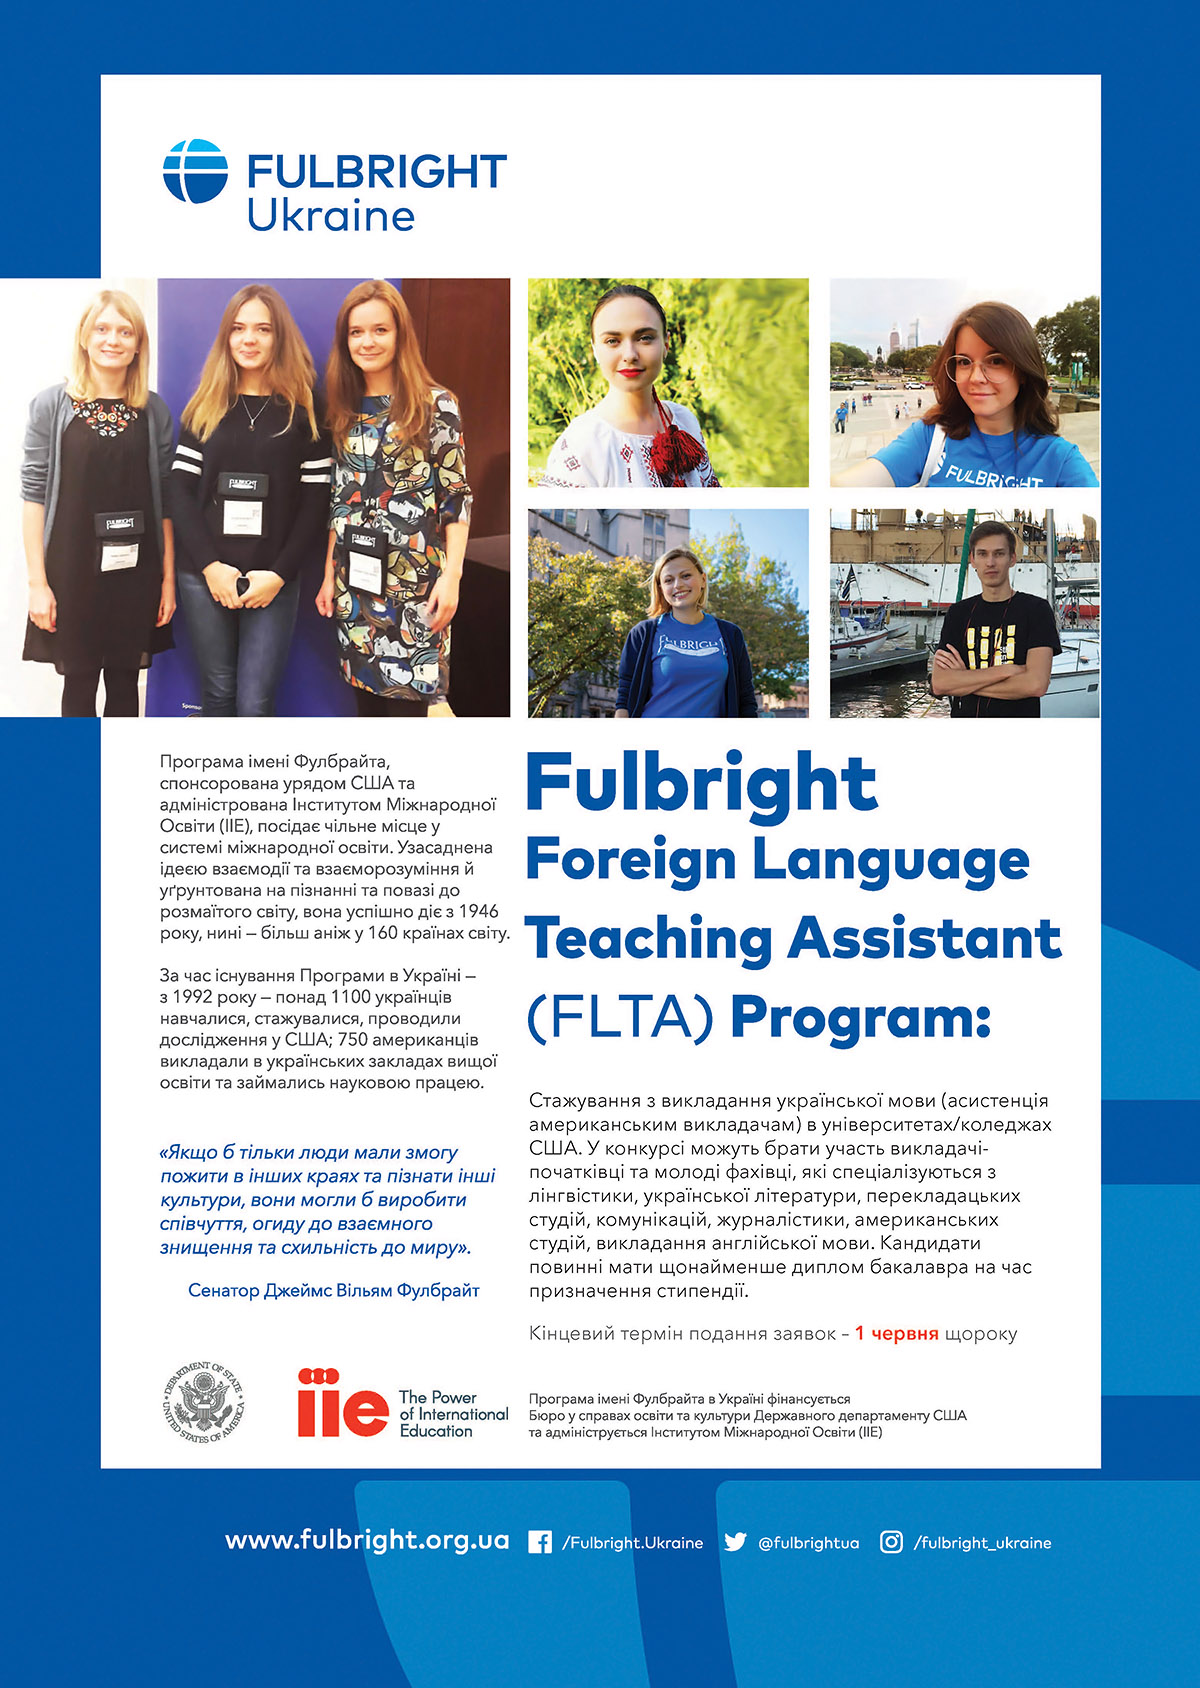 Fulbright FLTA Program